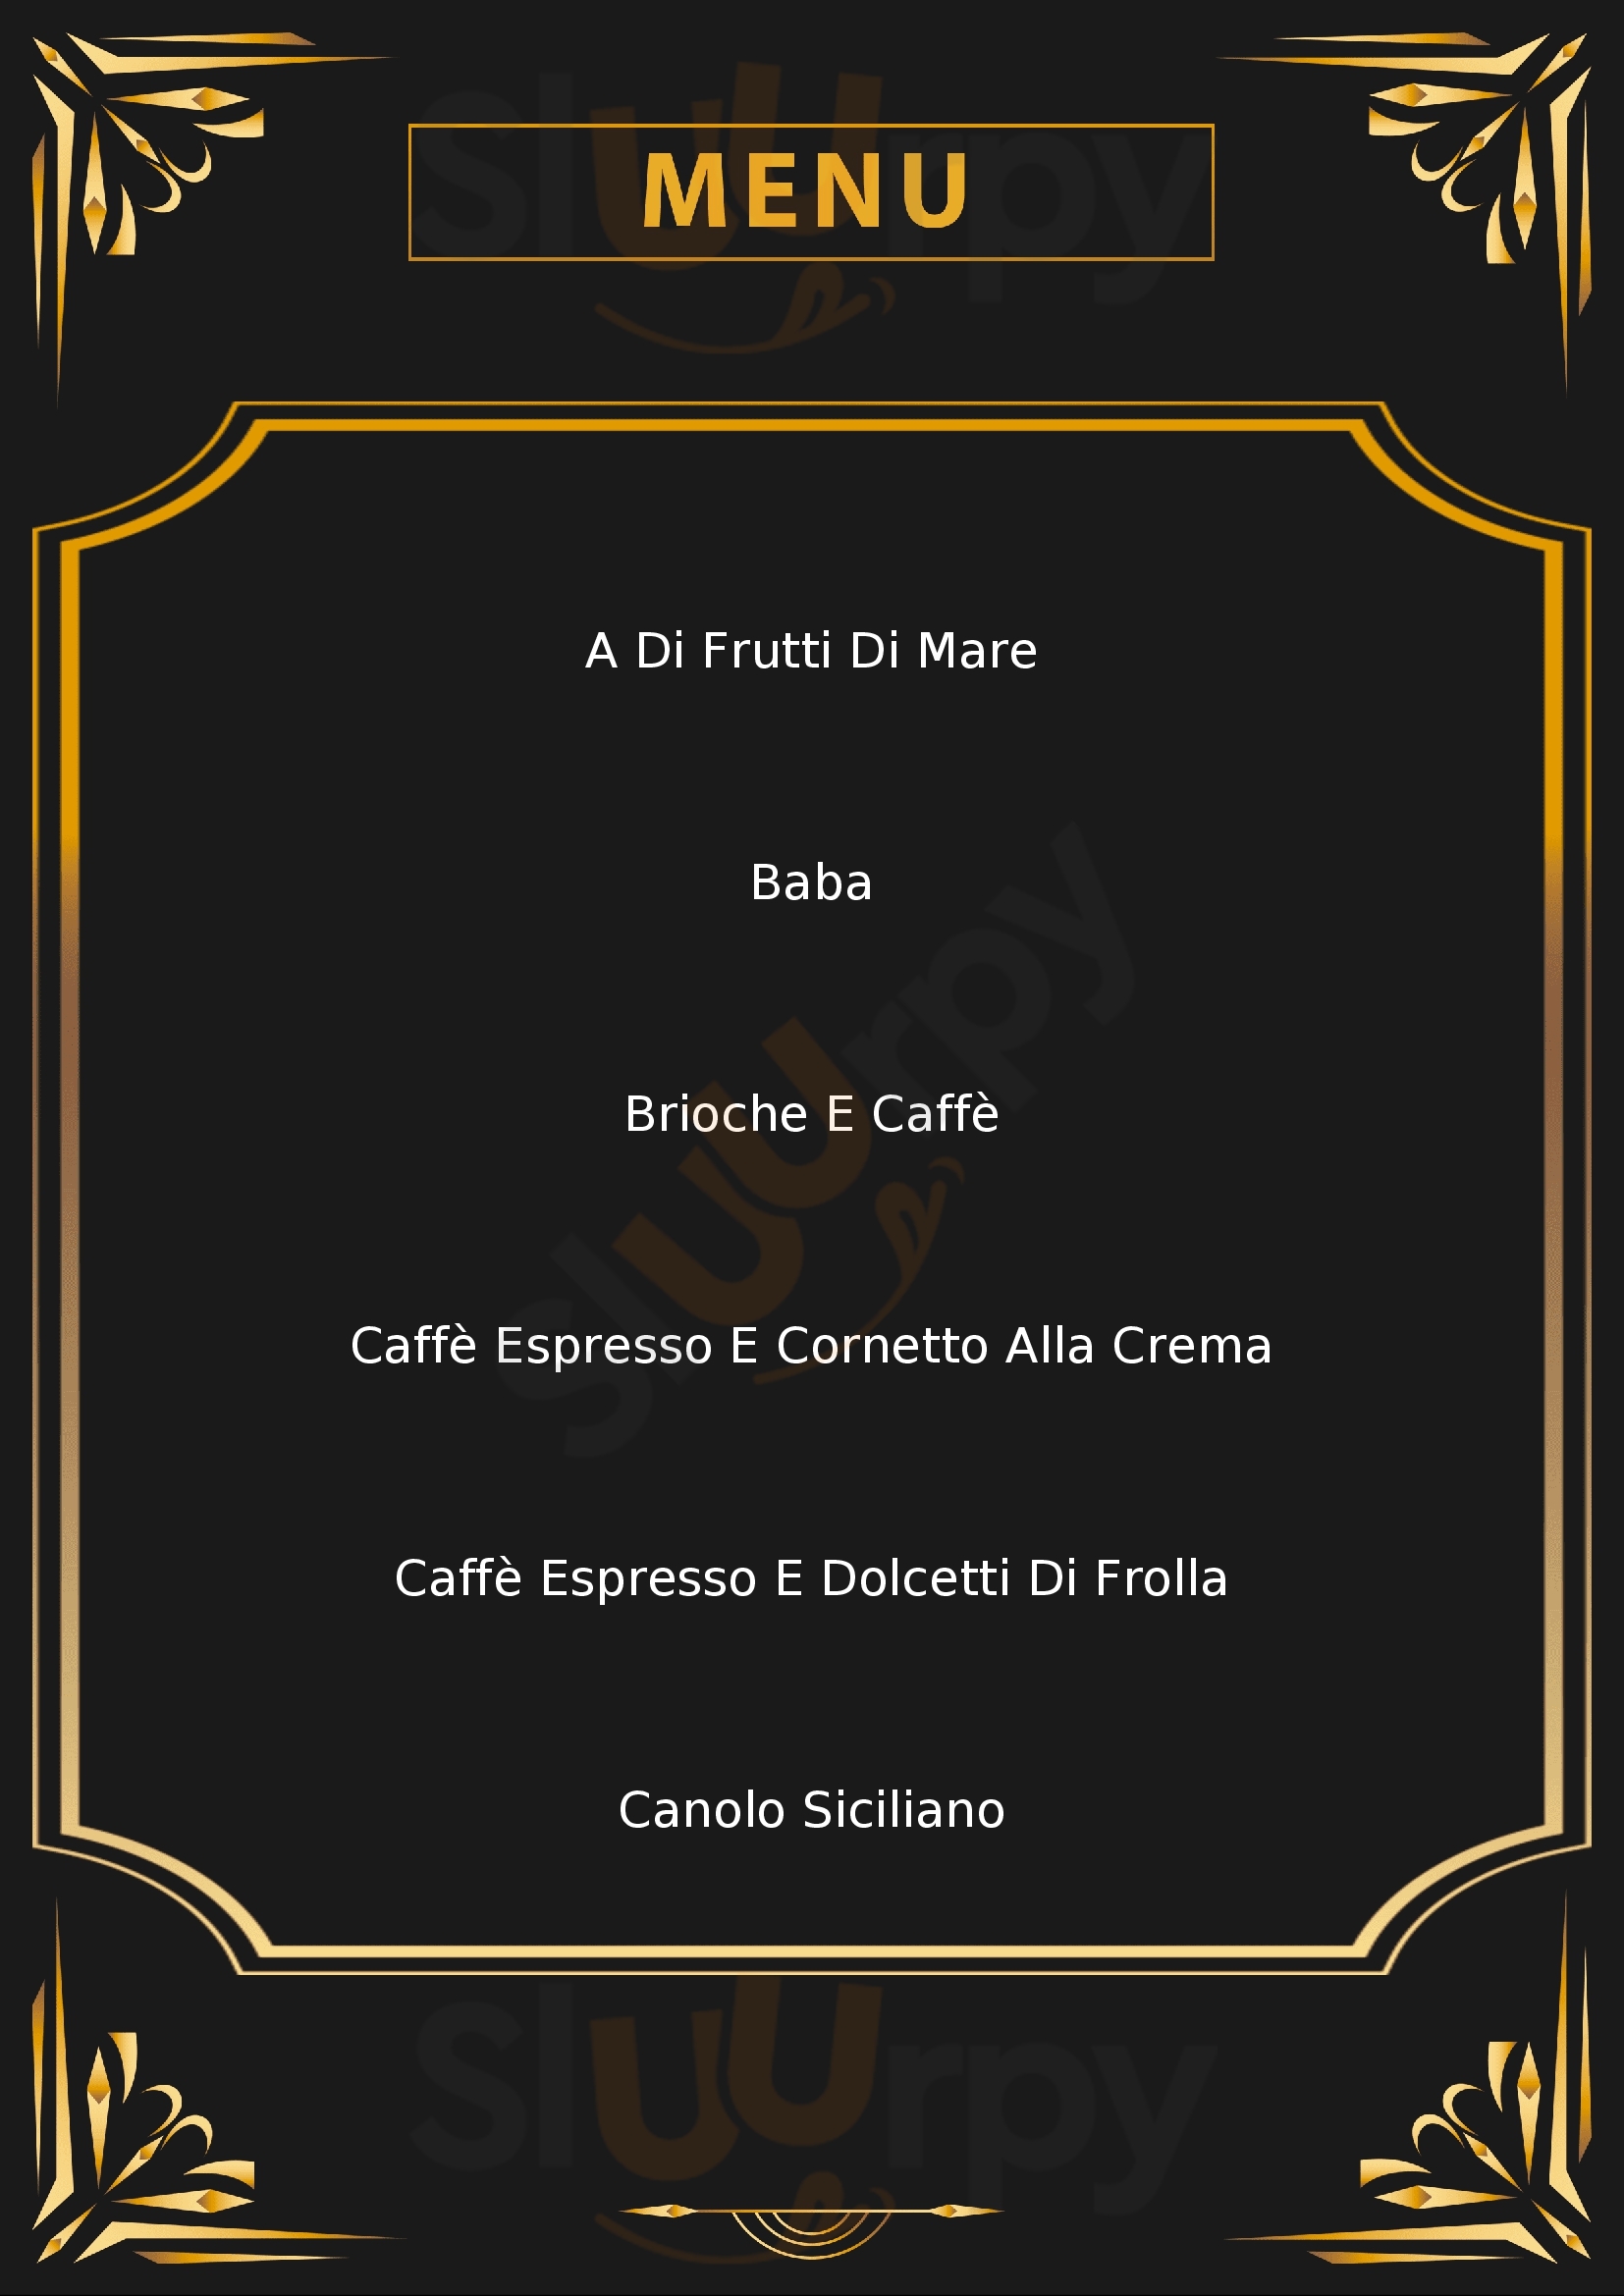 Gran Caffe Canasta Salerno menù 1 pagina